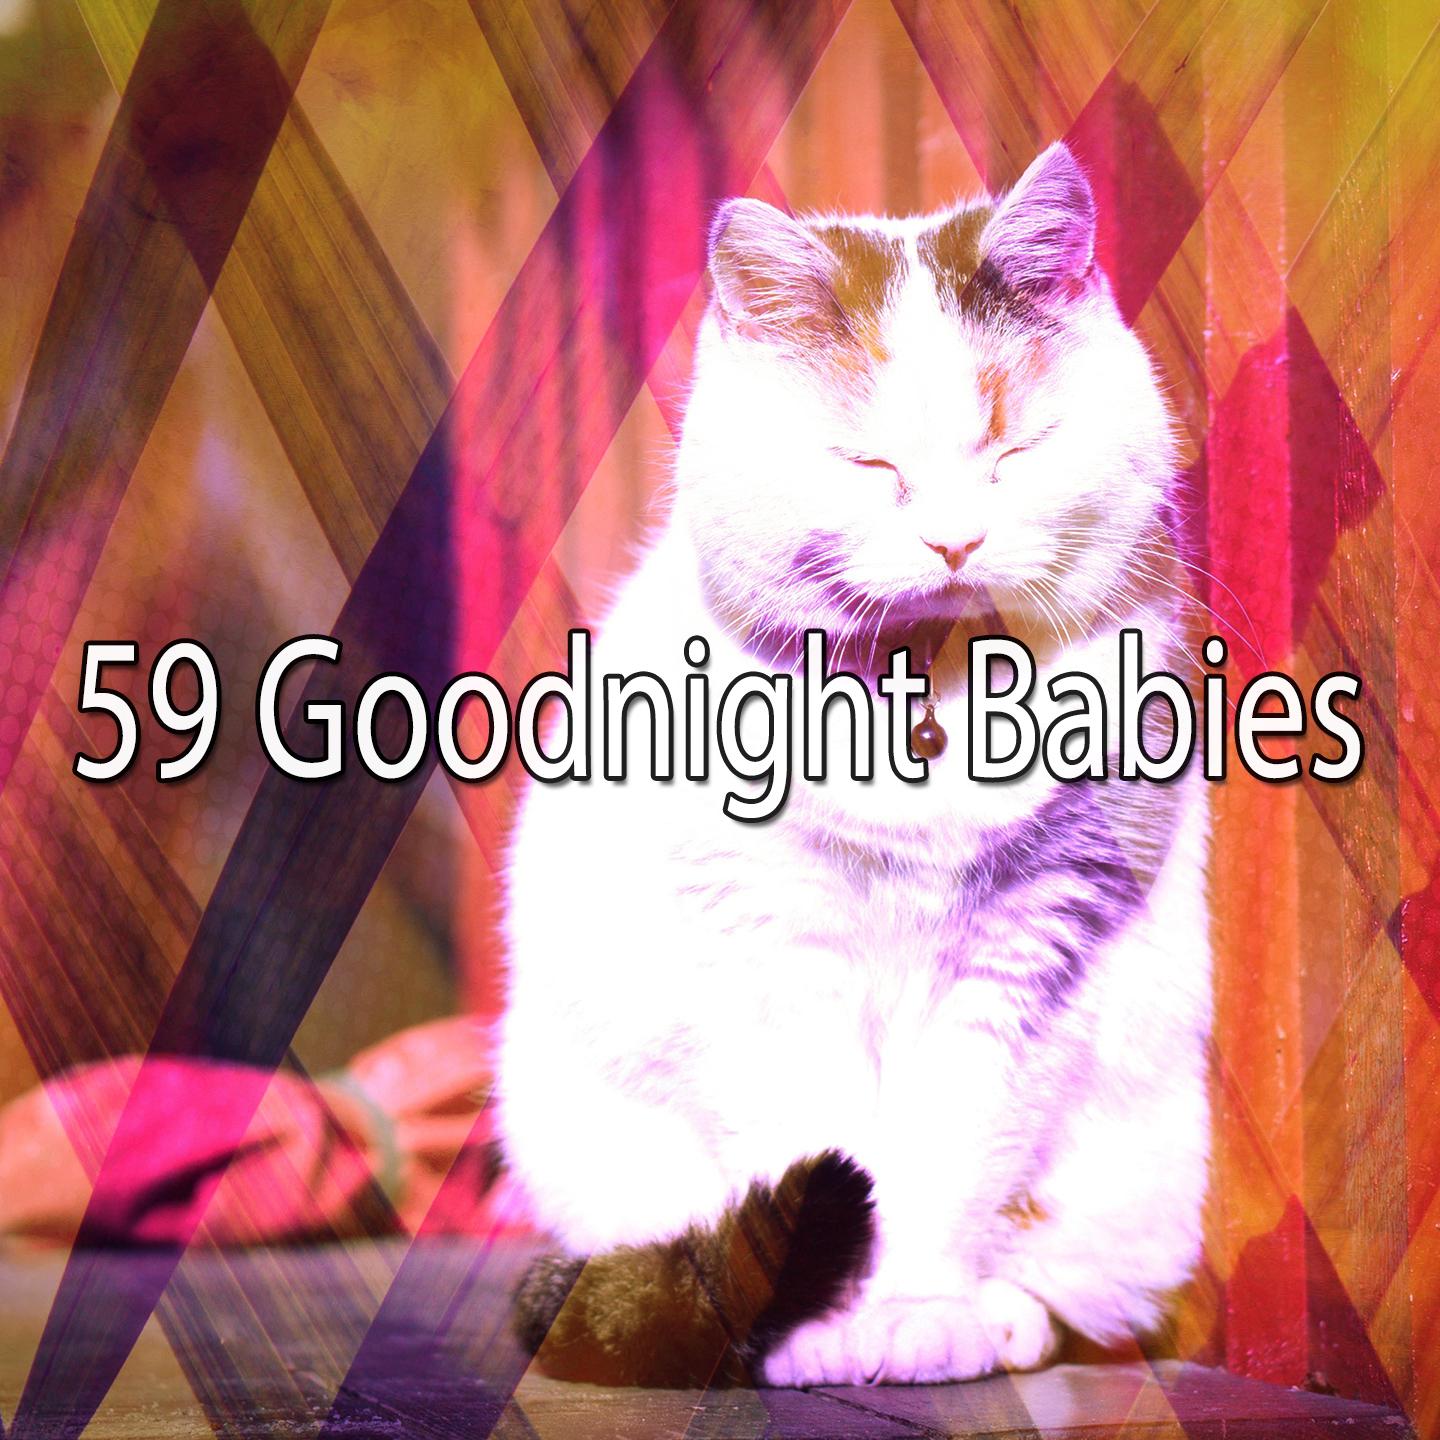 59 Goodnight Babies